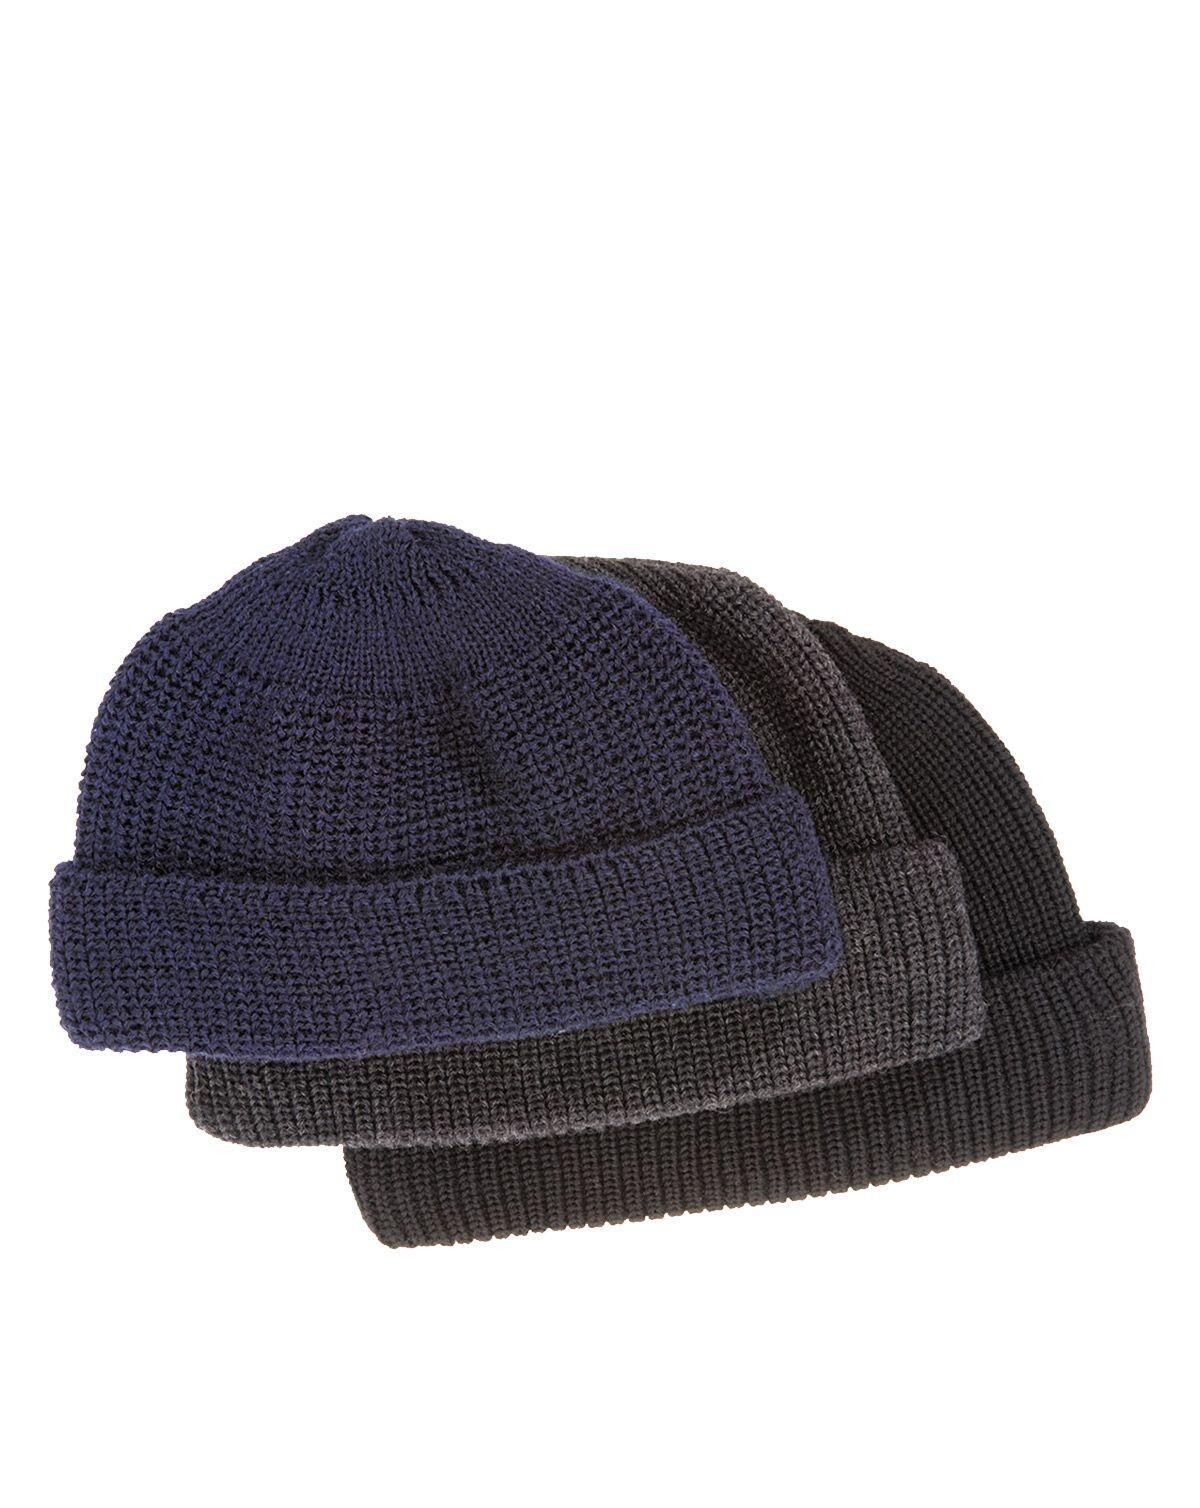 #2 - FHB Uld hat - Johann (Sort, One Size)